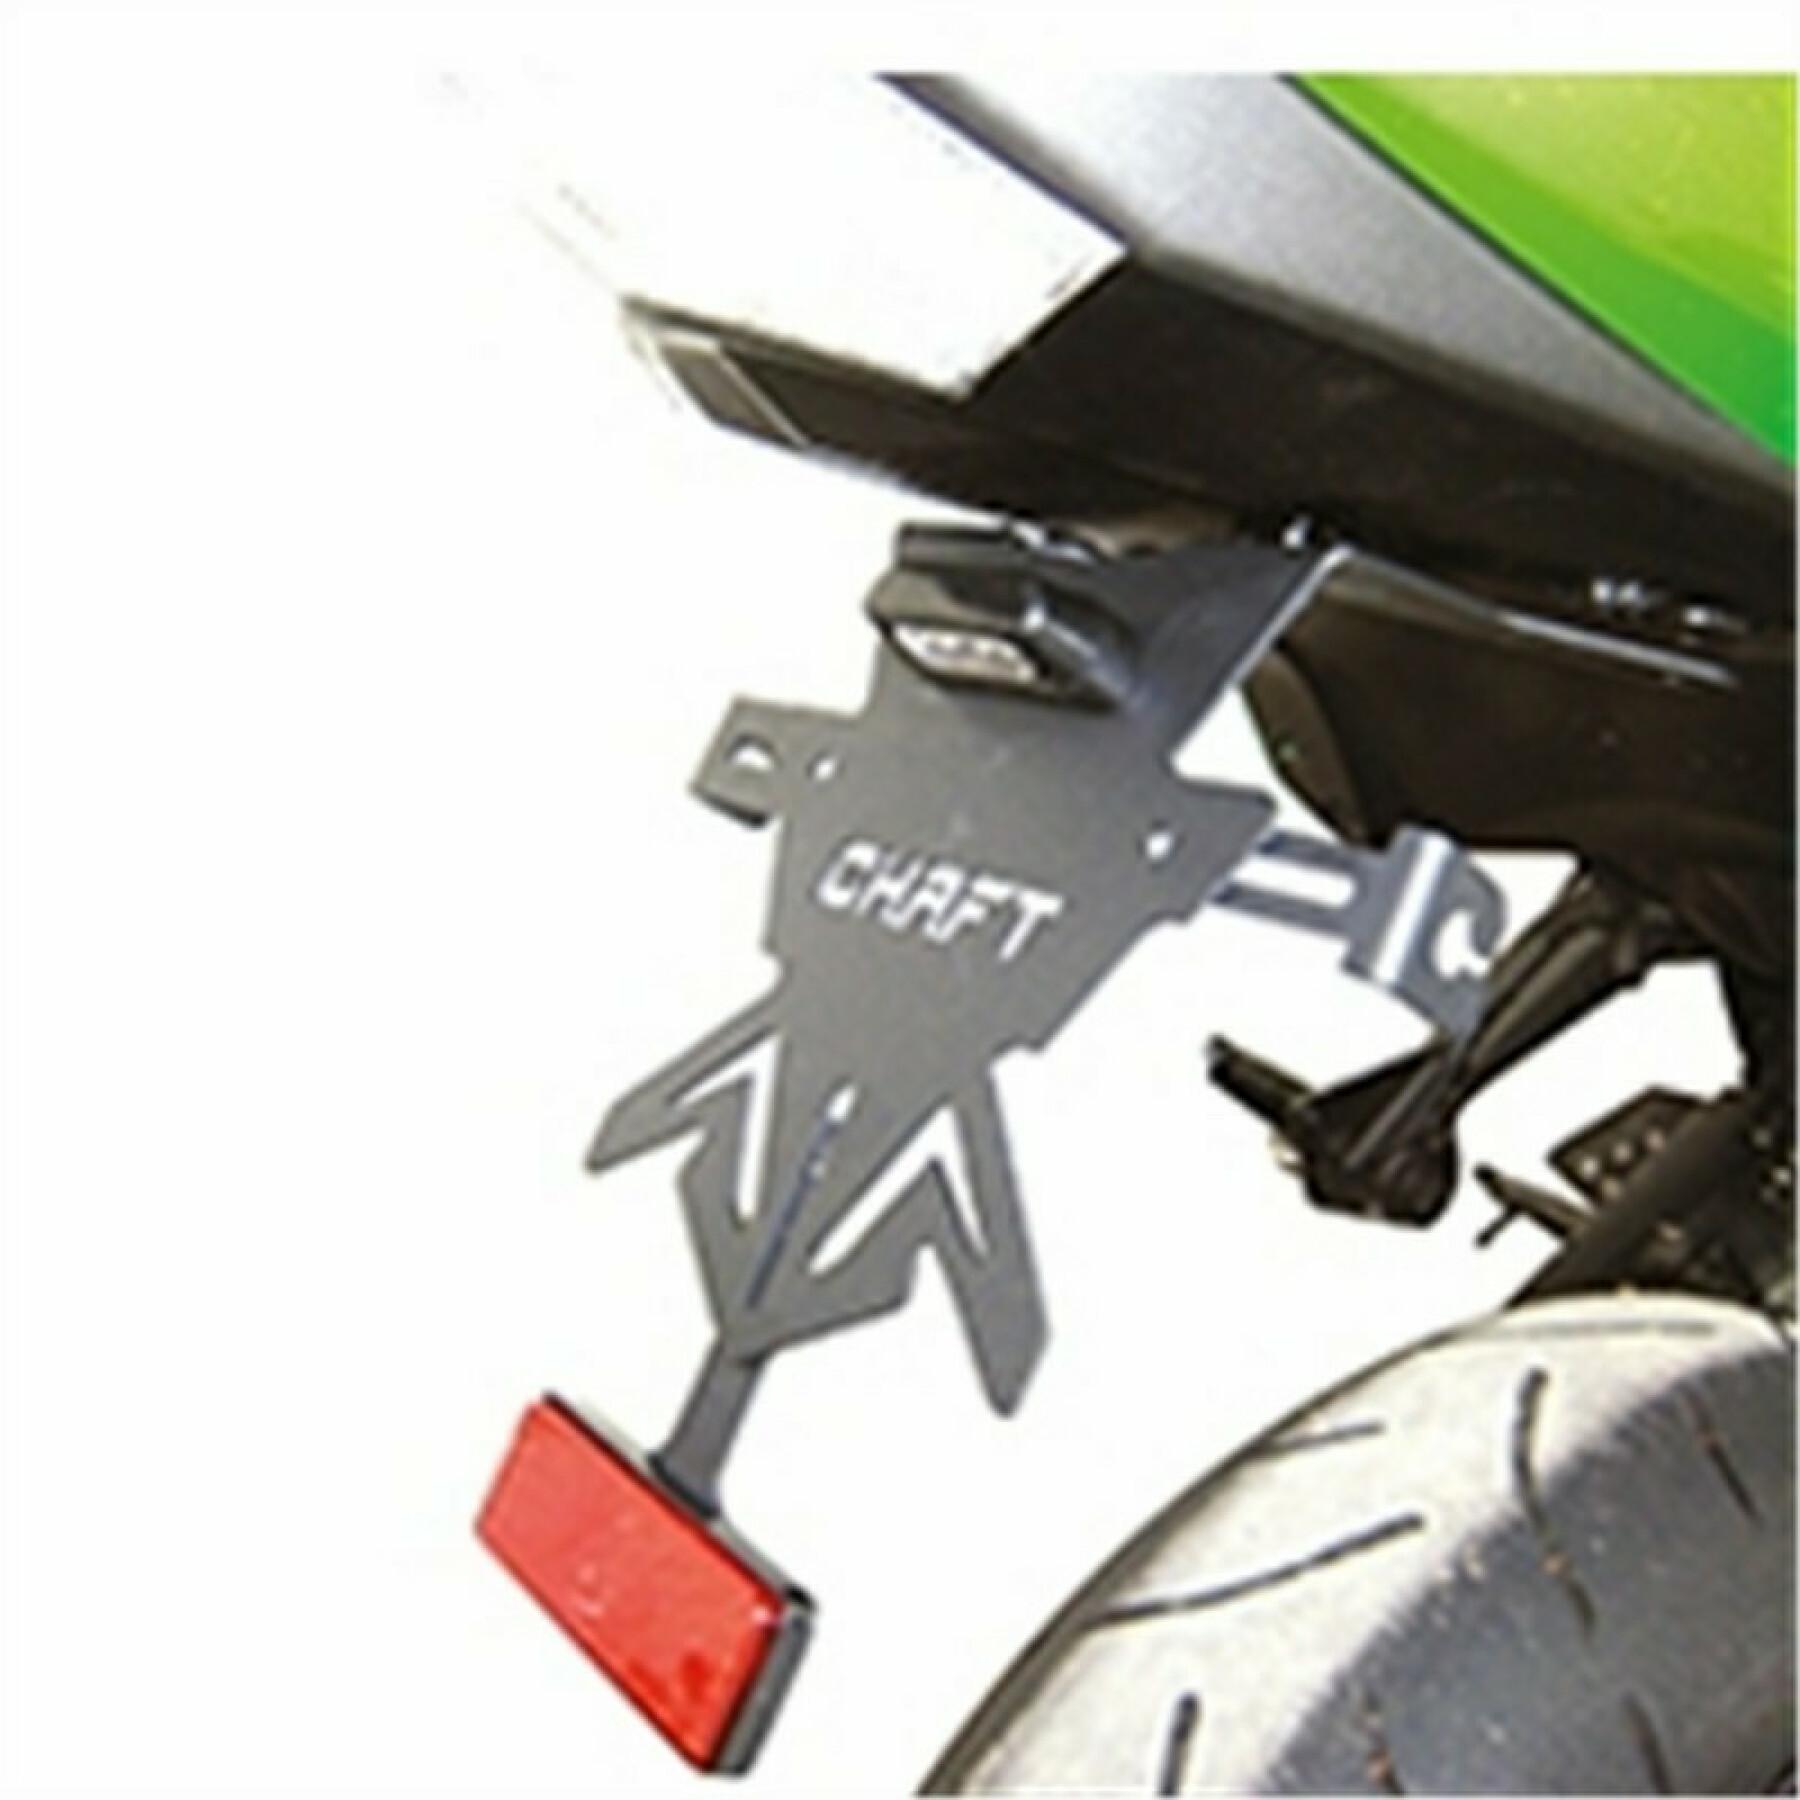 Portaplacas Chaft Z 750/R 2007-2012Z 1000 2007-2009